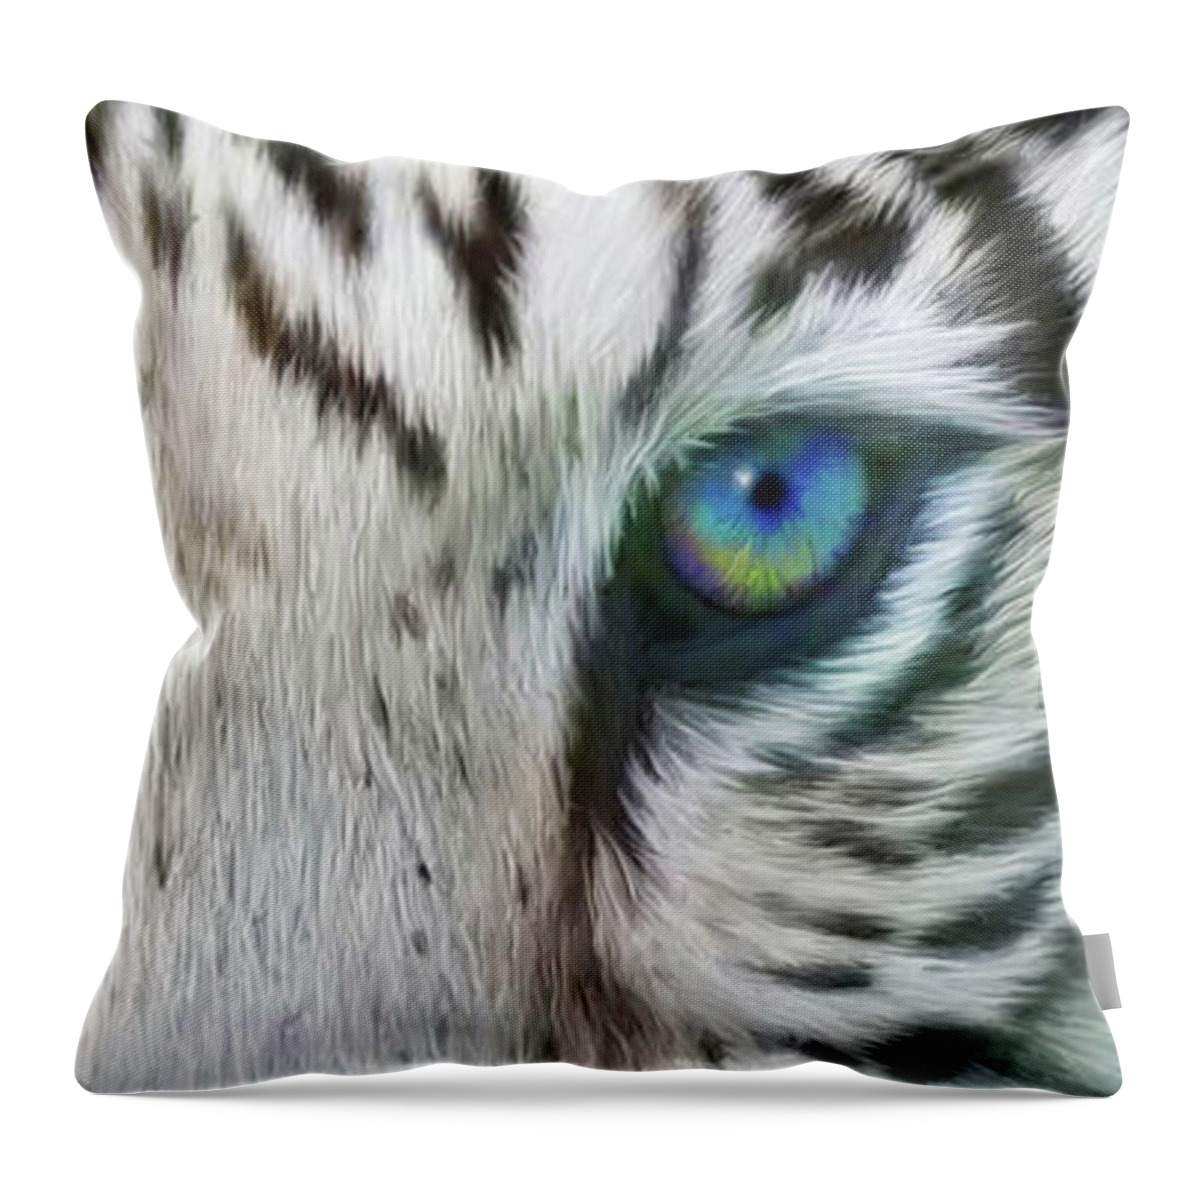 Tiger Throw Pillow featuring the mixed media Wild Eyes - White Tiger by Carol Cavalaris